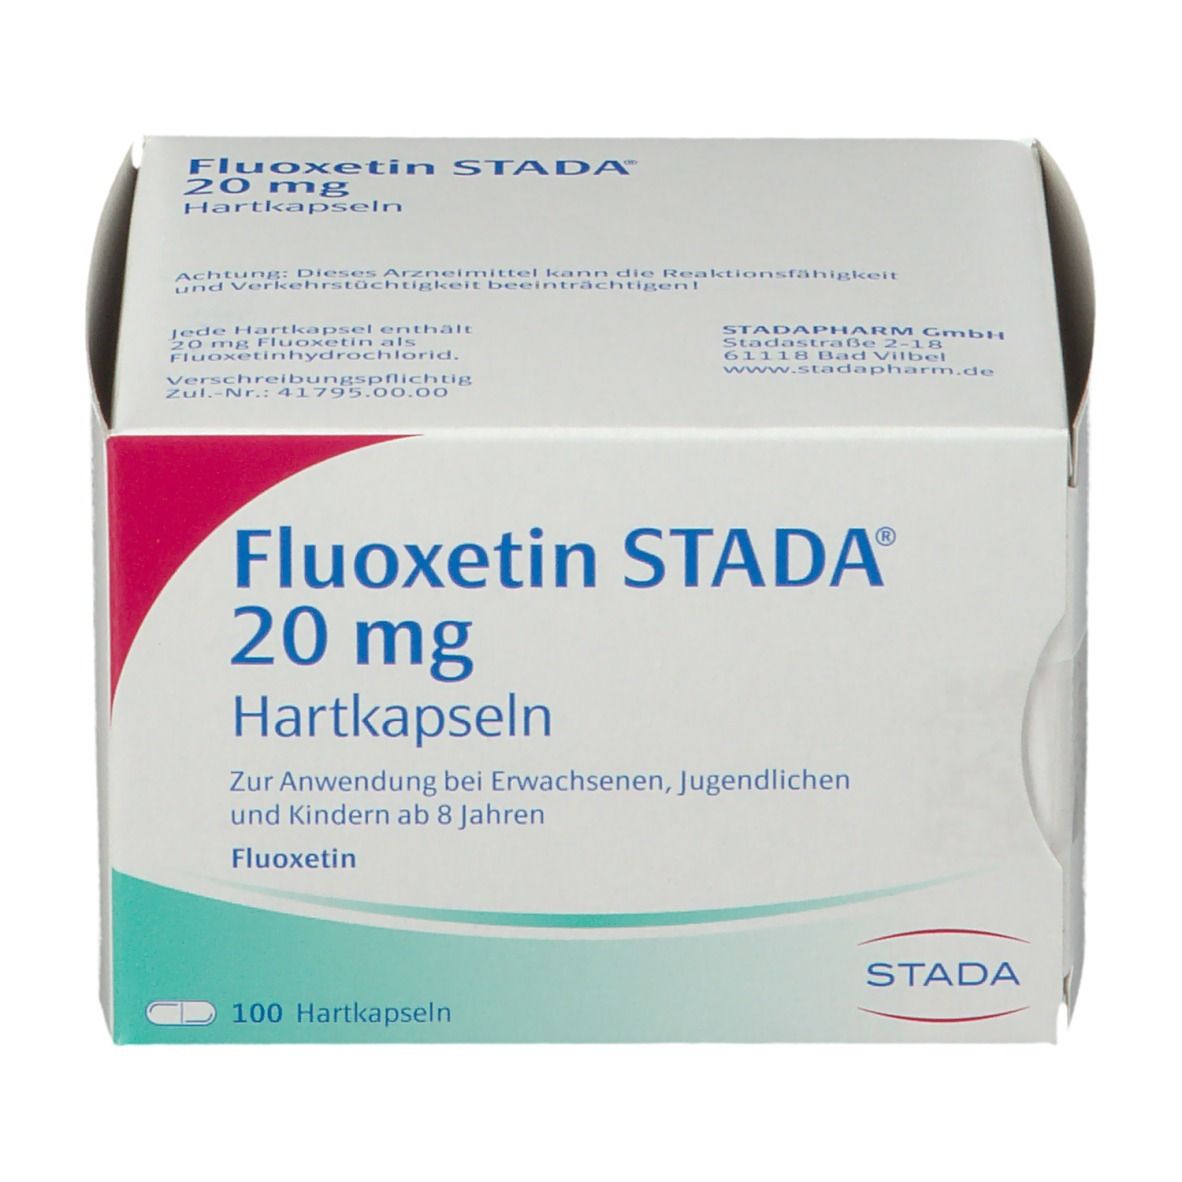 Fluoxetin STADA® 20 mg